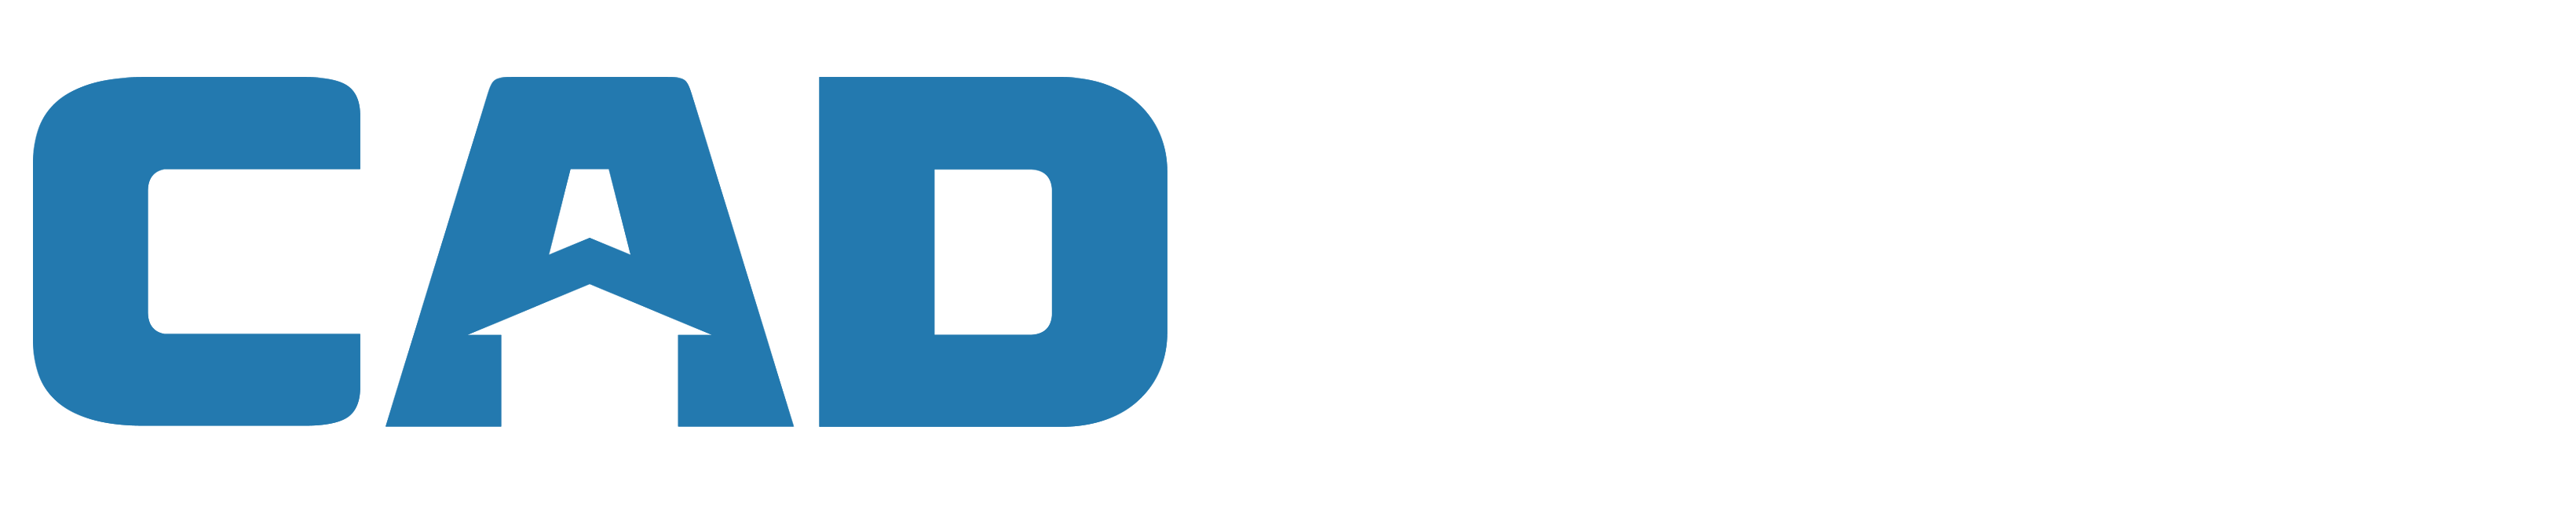 CADstudio-Logo-White